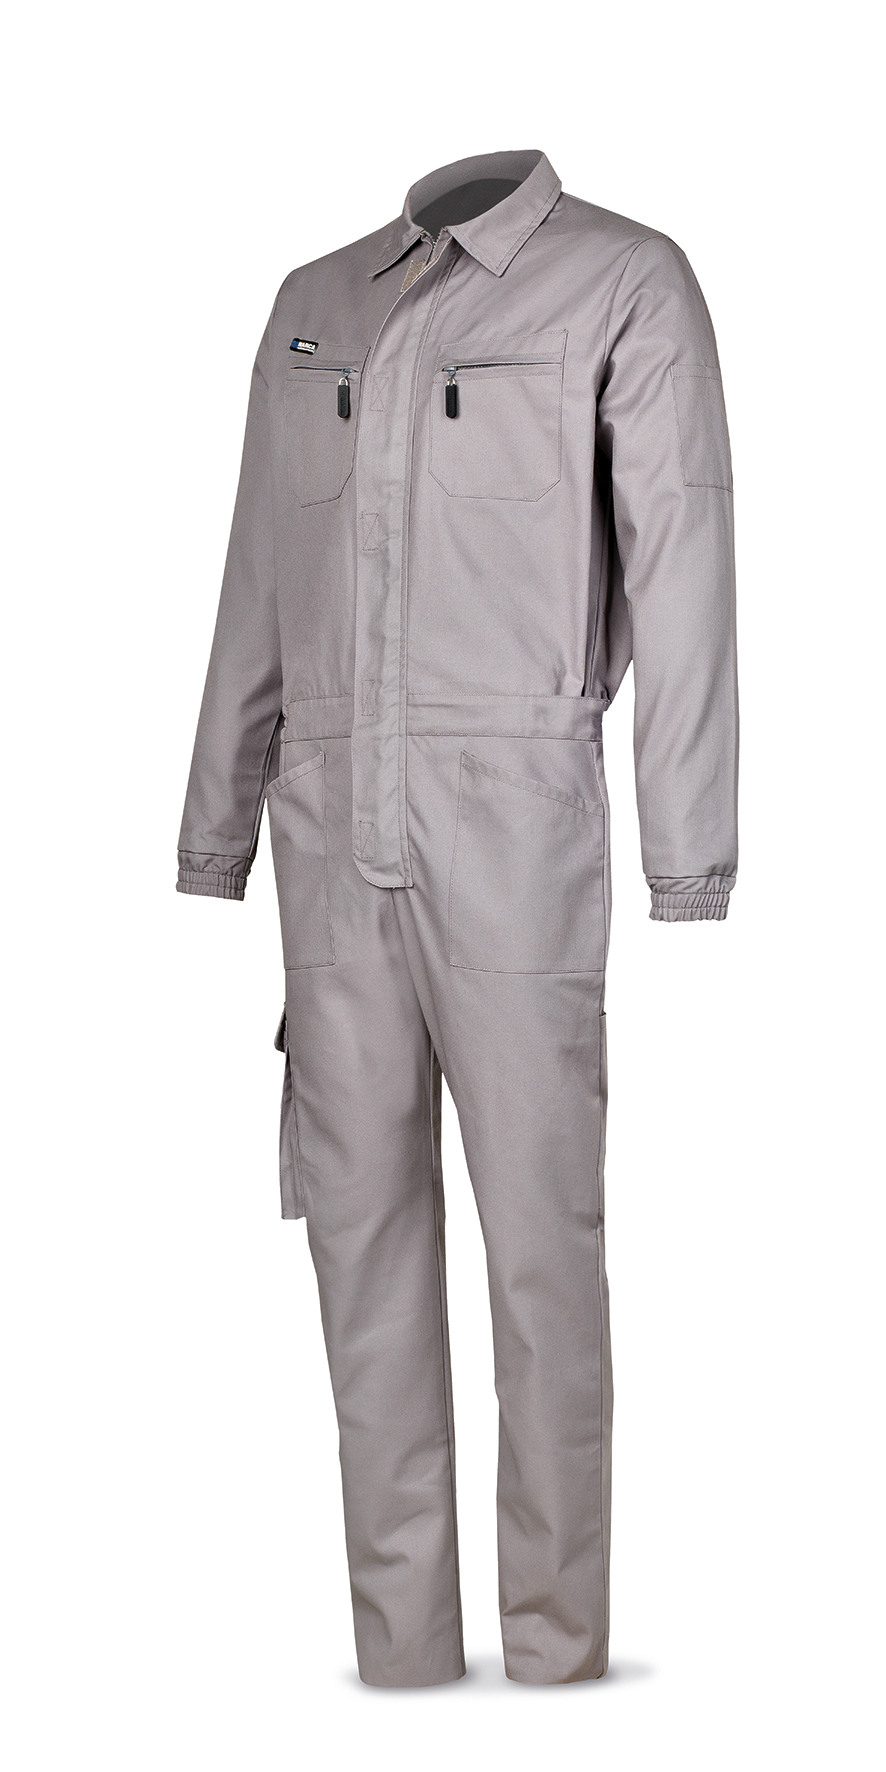 488-BTOPG Vestuario Laboral Top Series Macacão de algodão cinza 245 g.